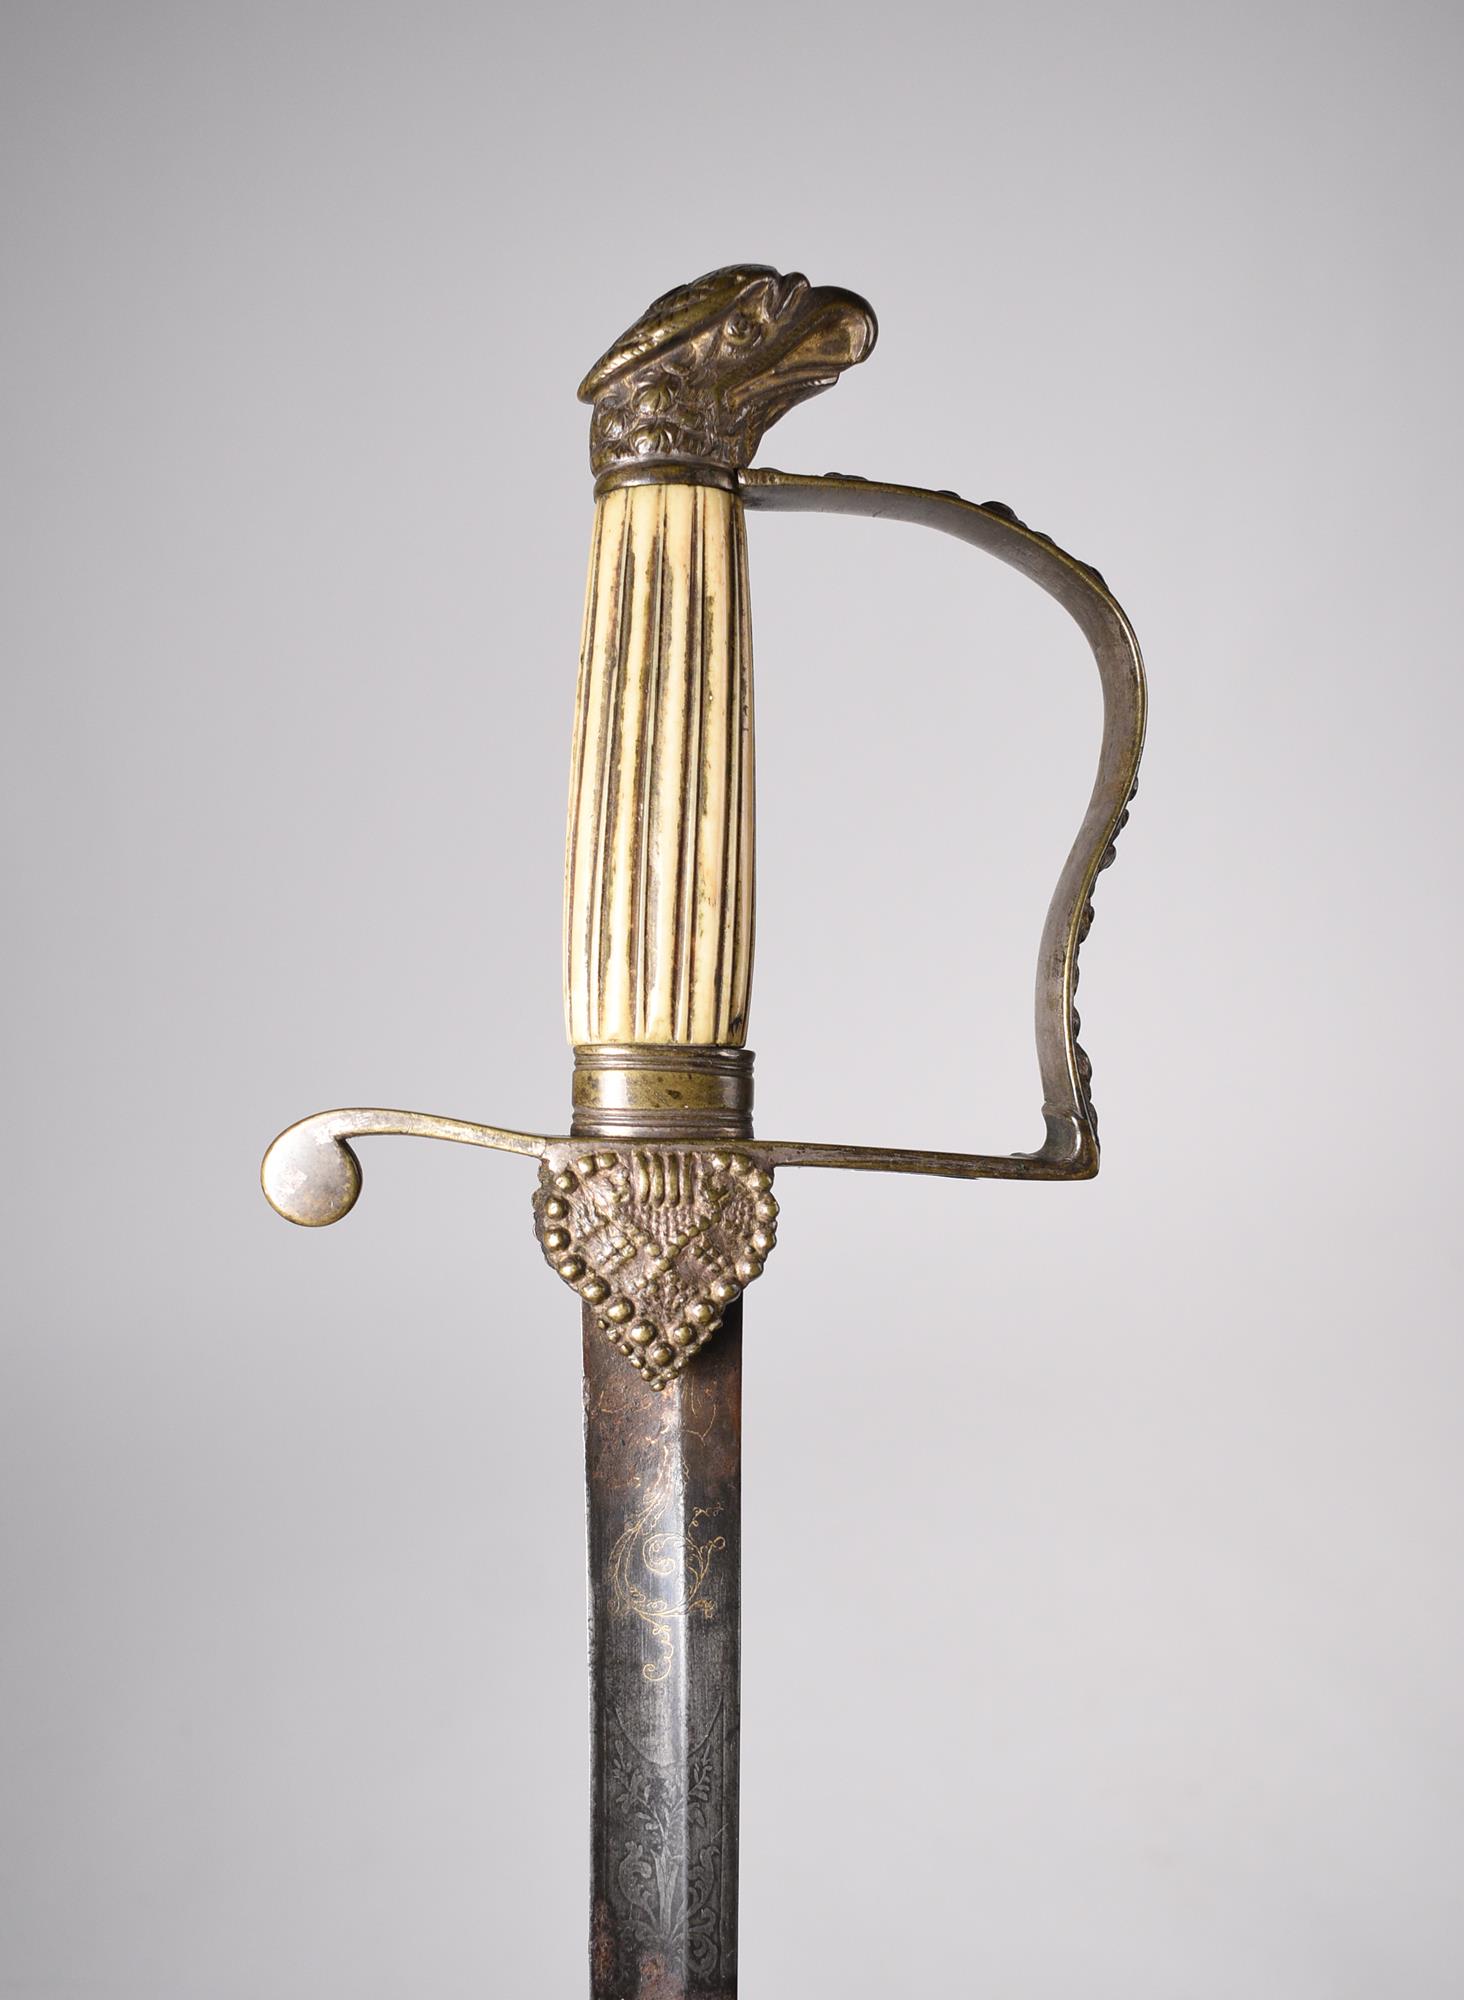 19TH C. PRESENTATION SWORD. Gilt